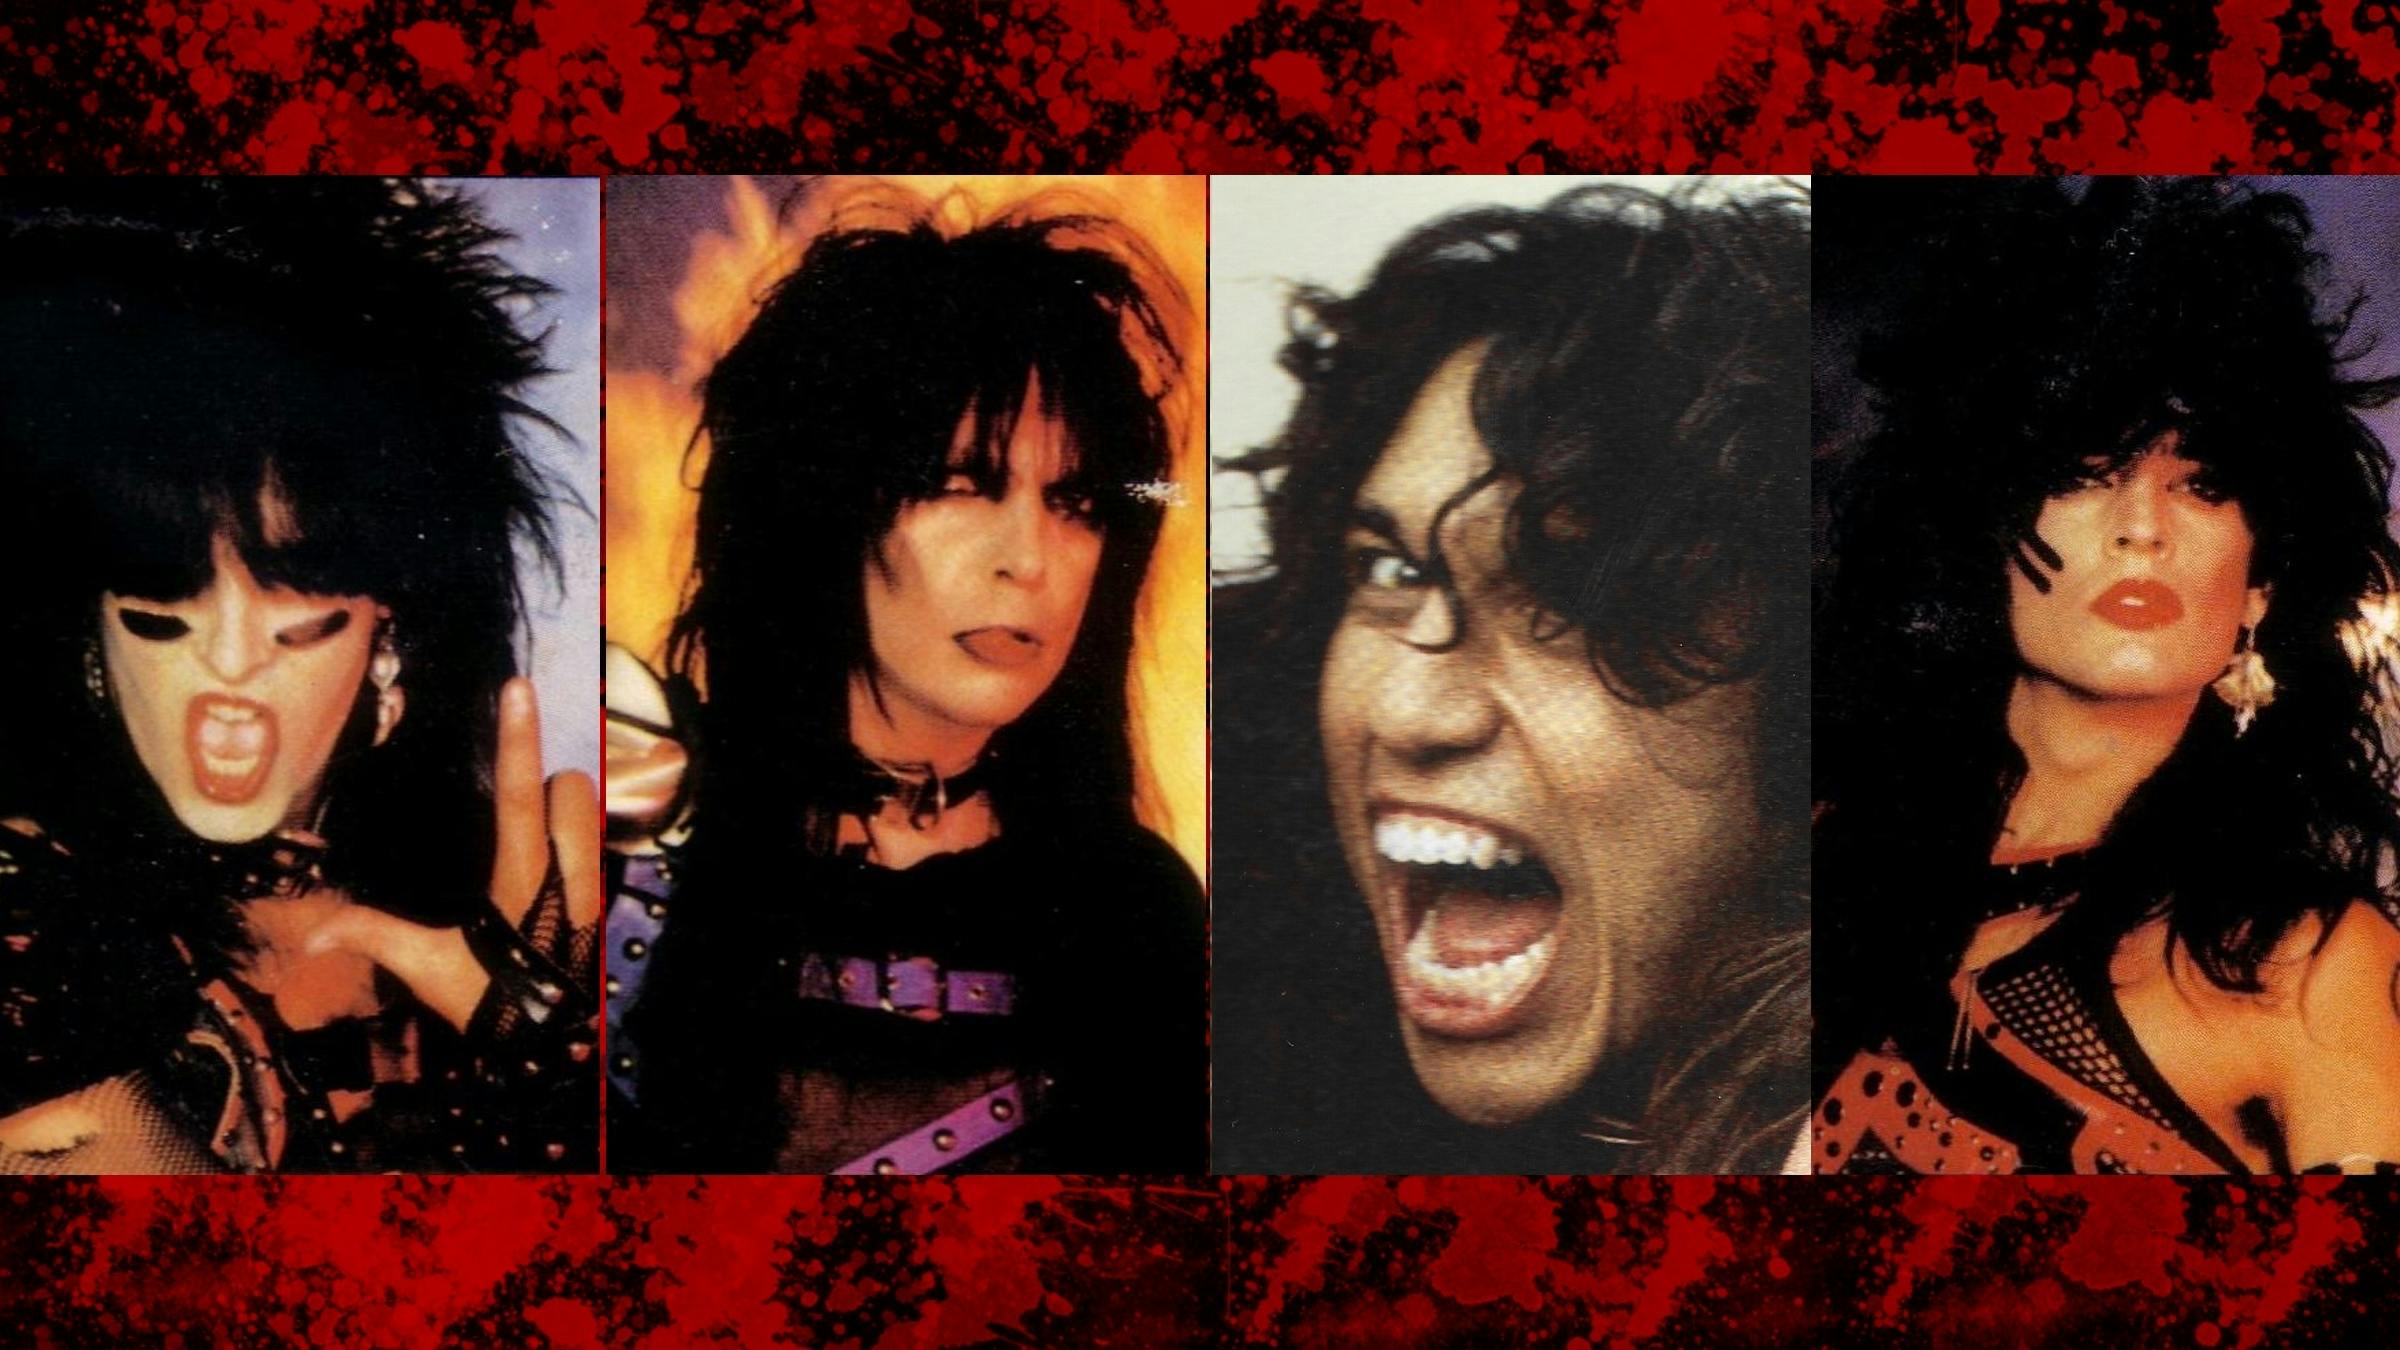 Watch Slayer's Tom Araya Covering Mötley Crüe's Looks That Kill In 1983